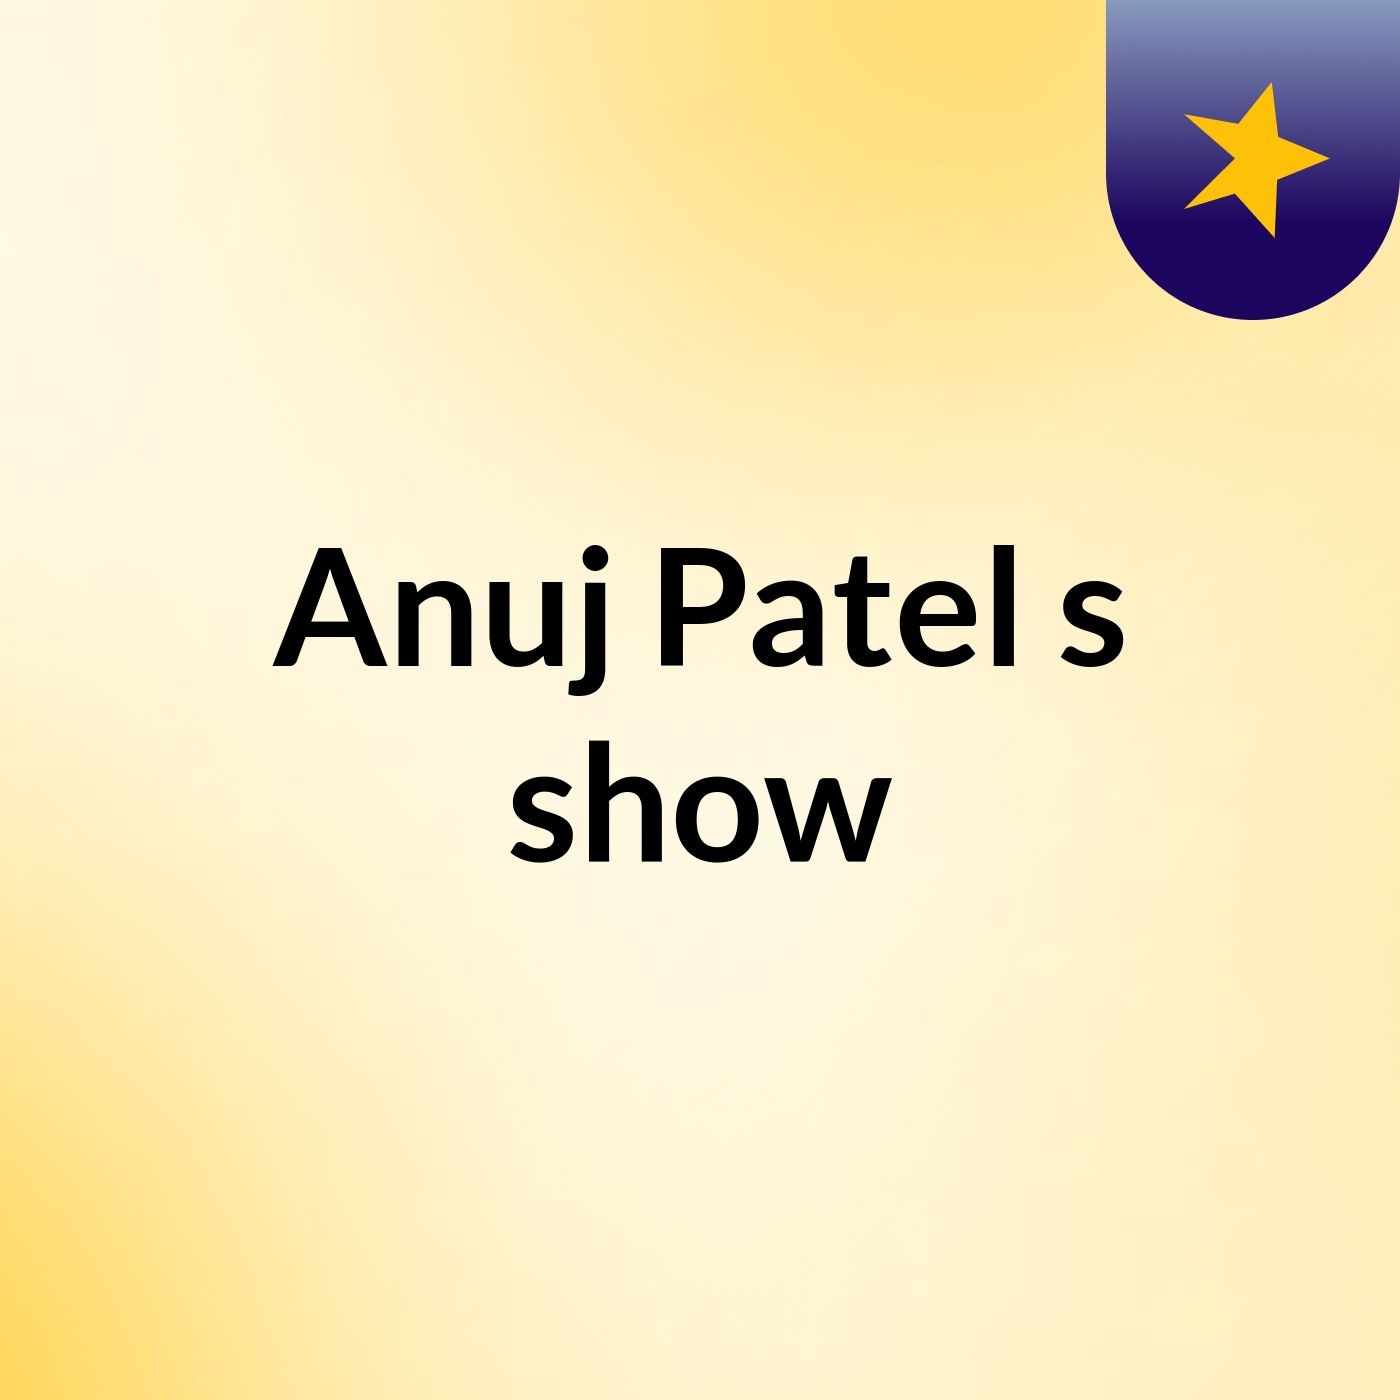 Anuj Patel's show